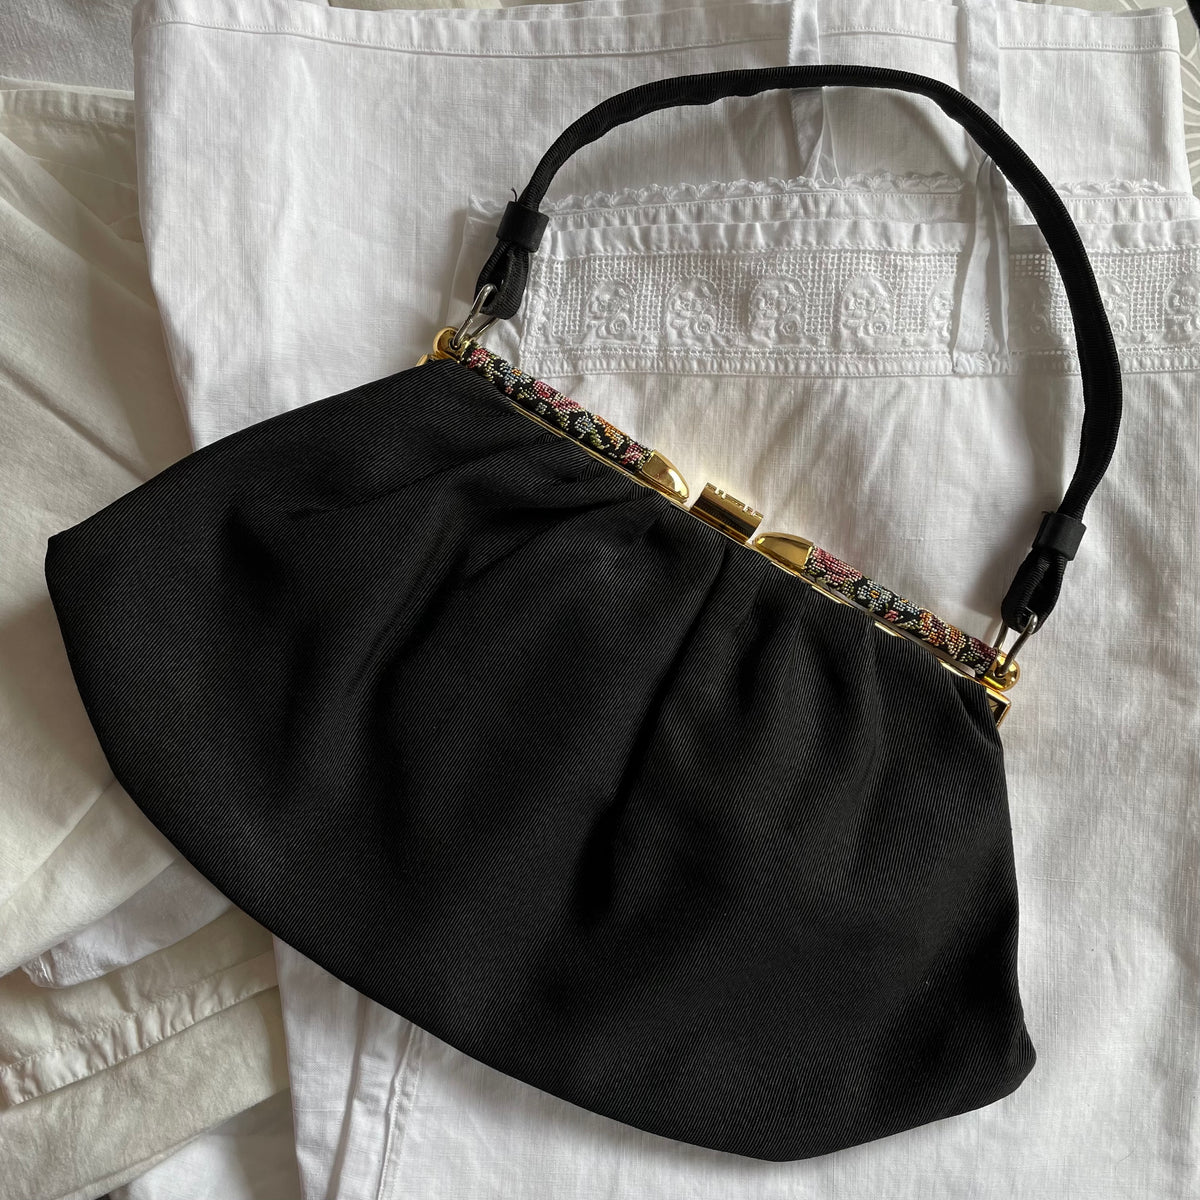 1950s Handbags, Purses, and Evening Bag Styles